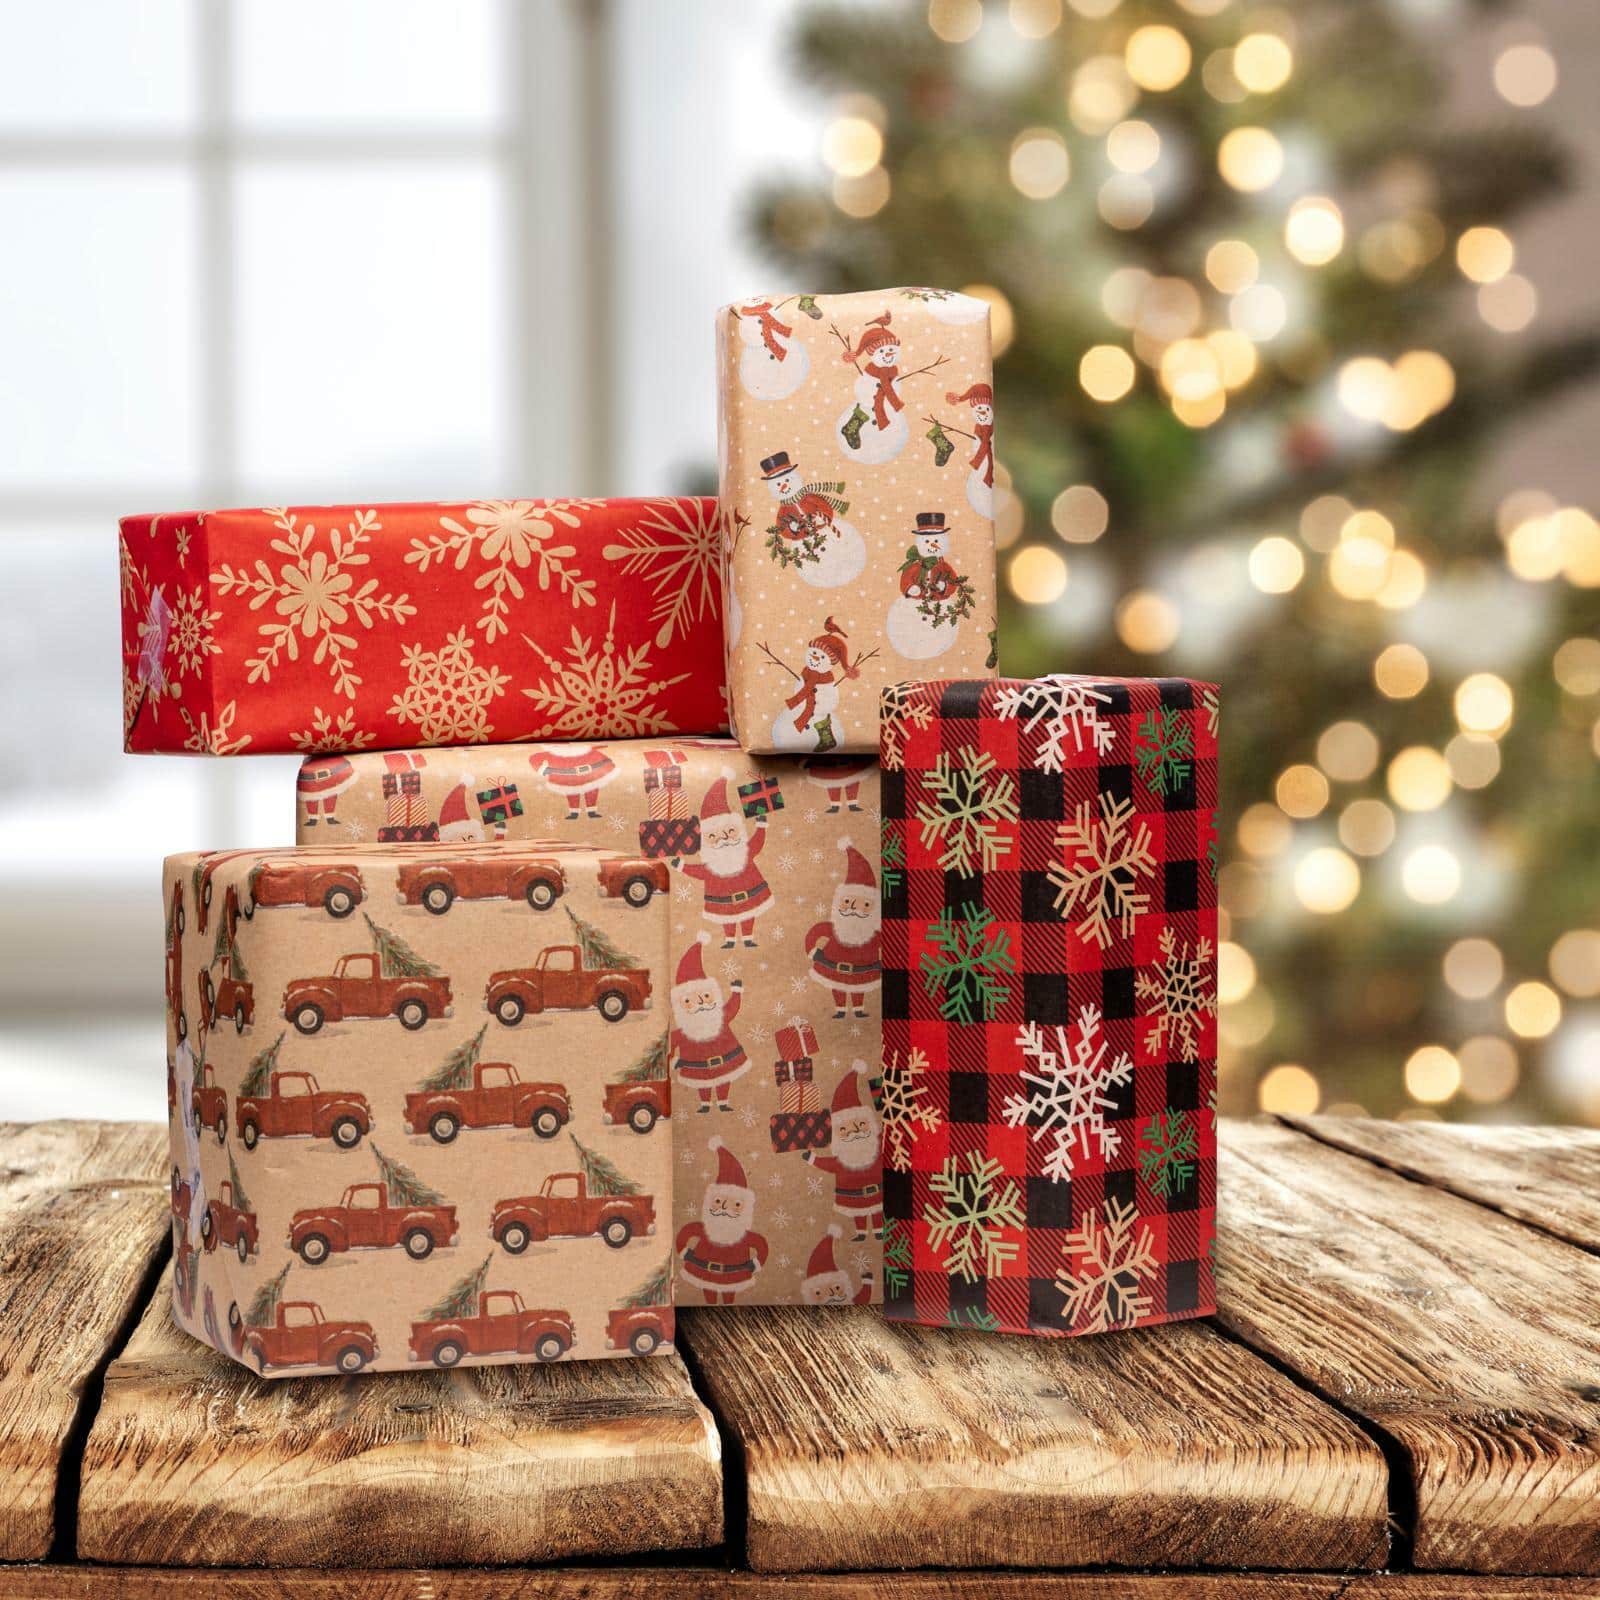 JAM Paper Christmas Kraft Gift Wrap Set, 5ct. 